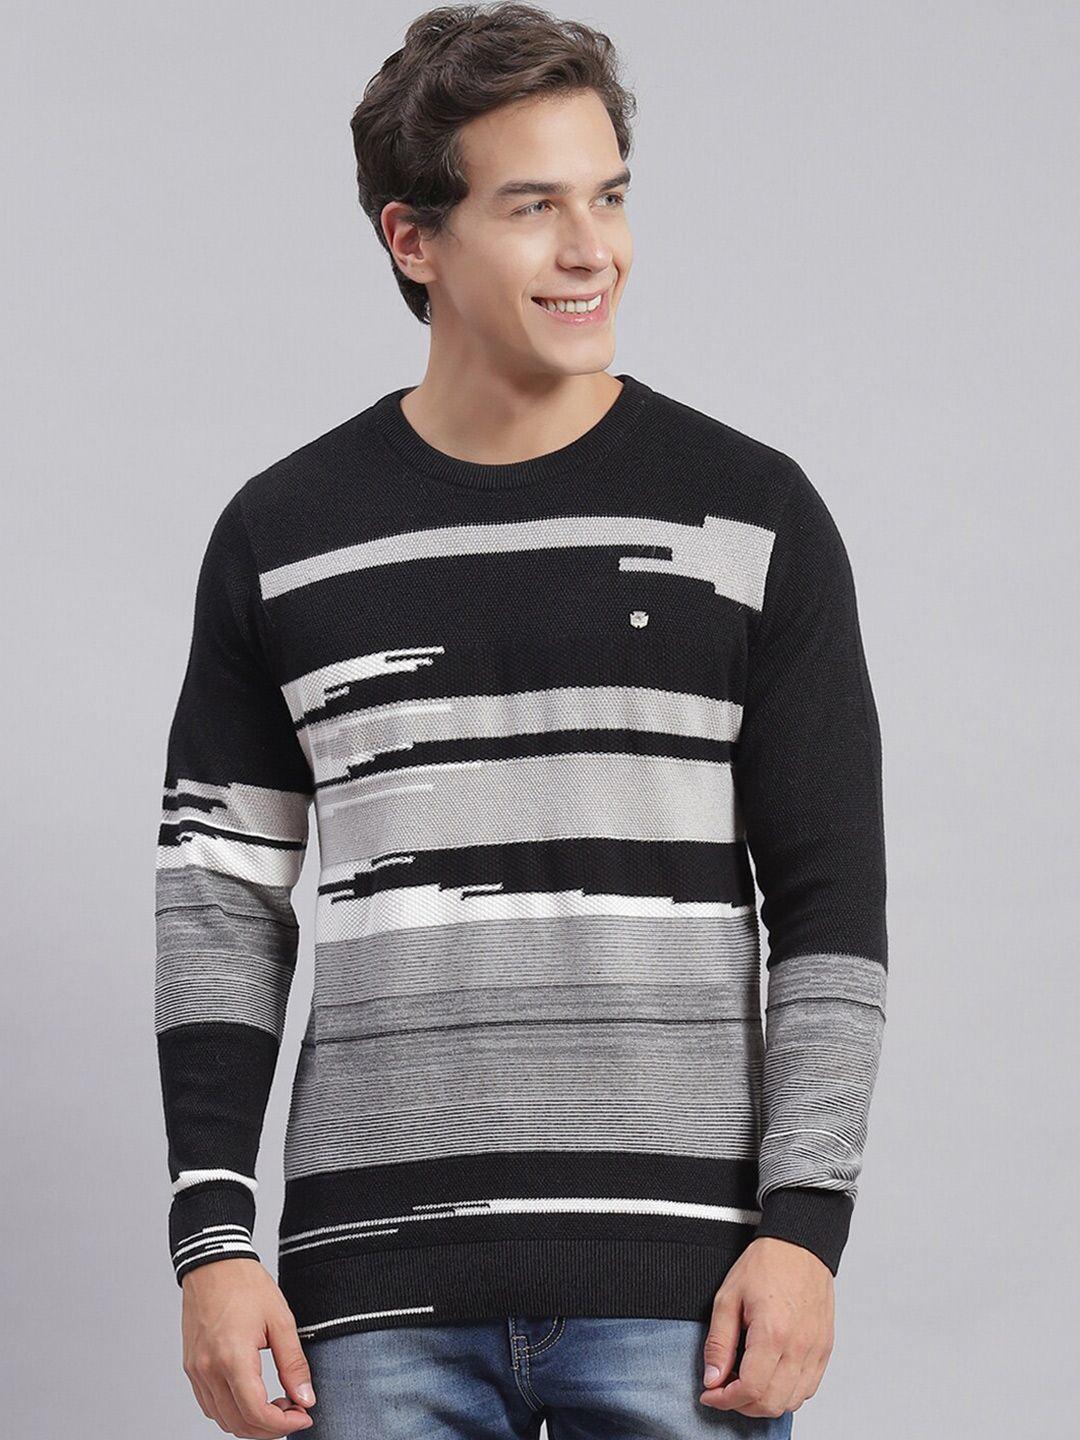 monte carlo self design woollen pullover sweater